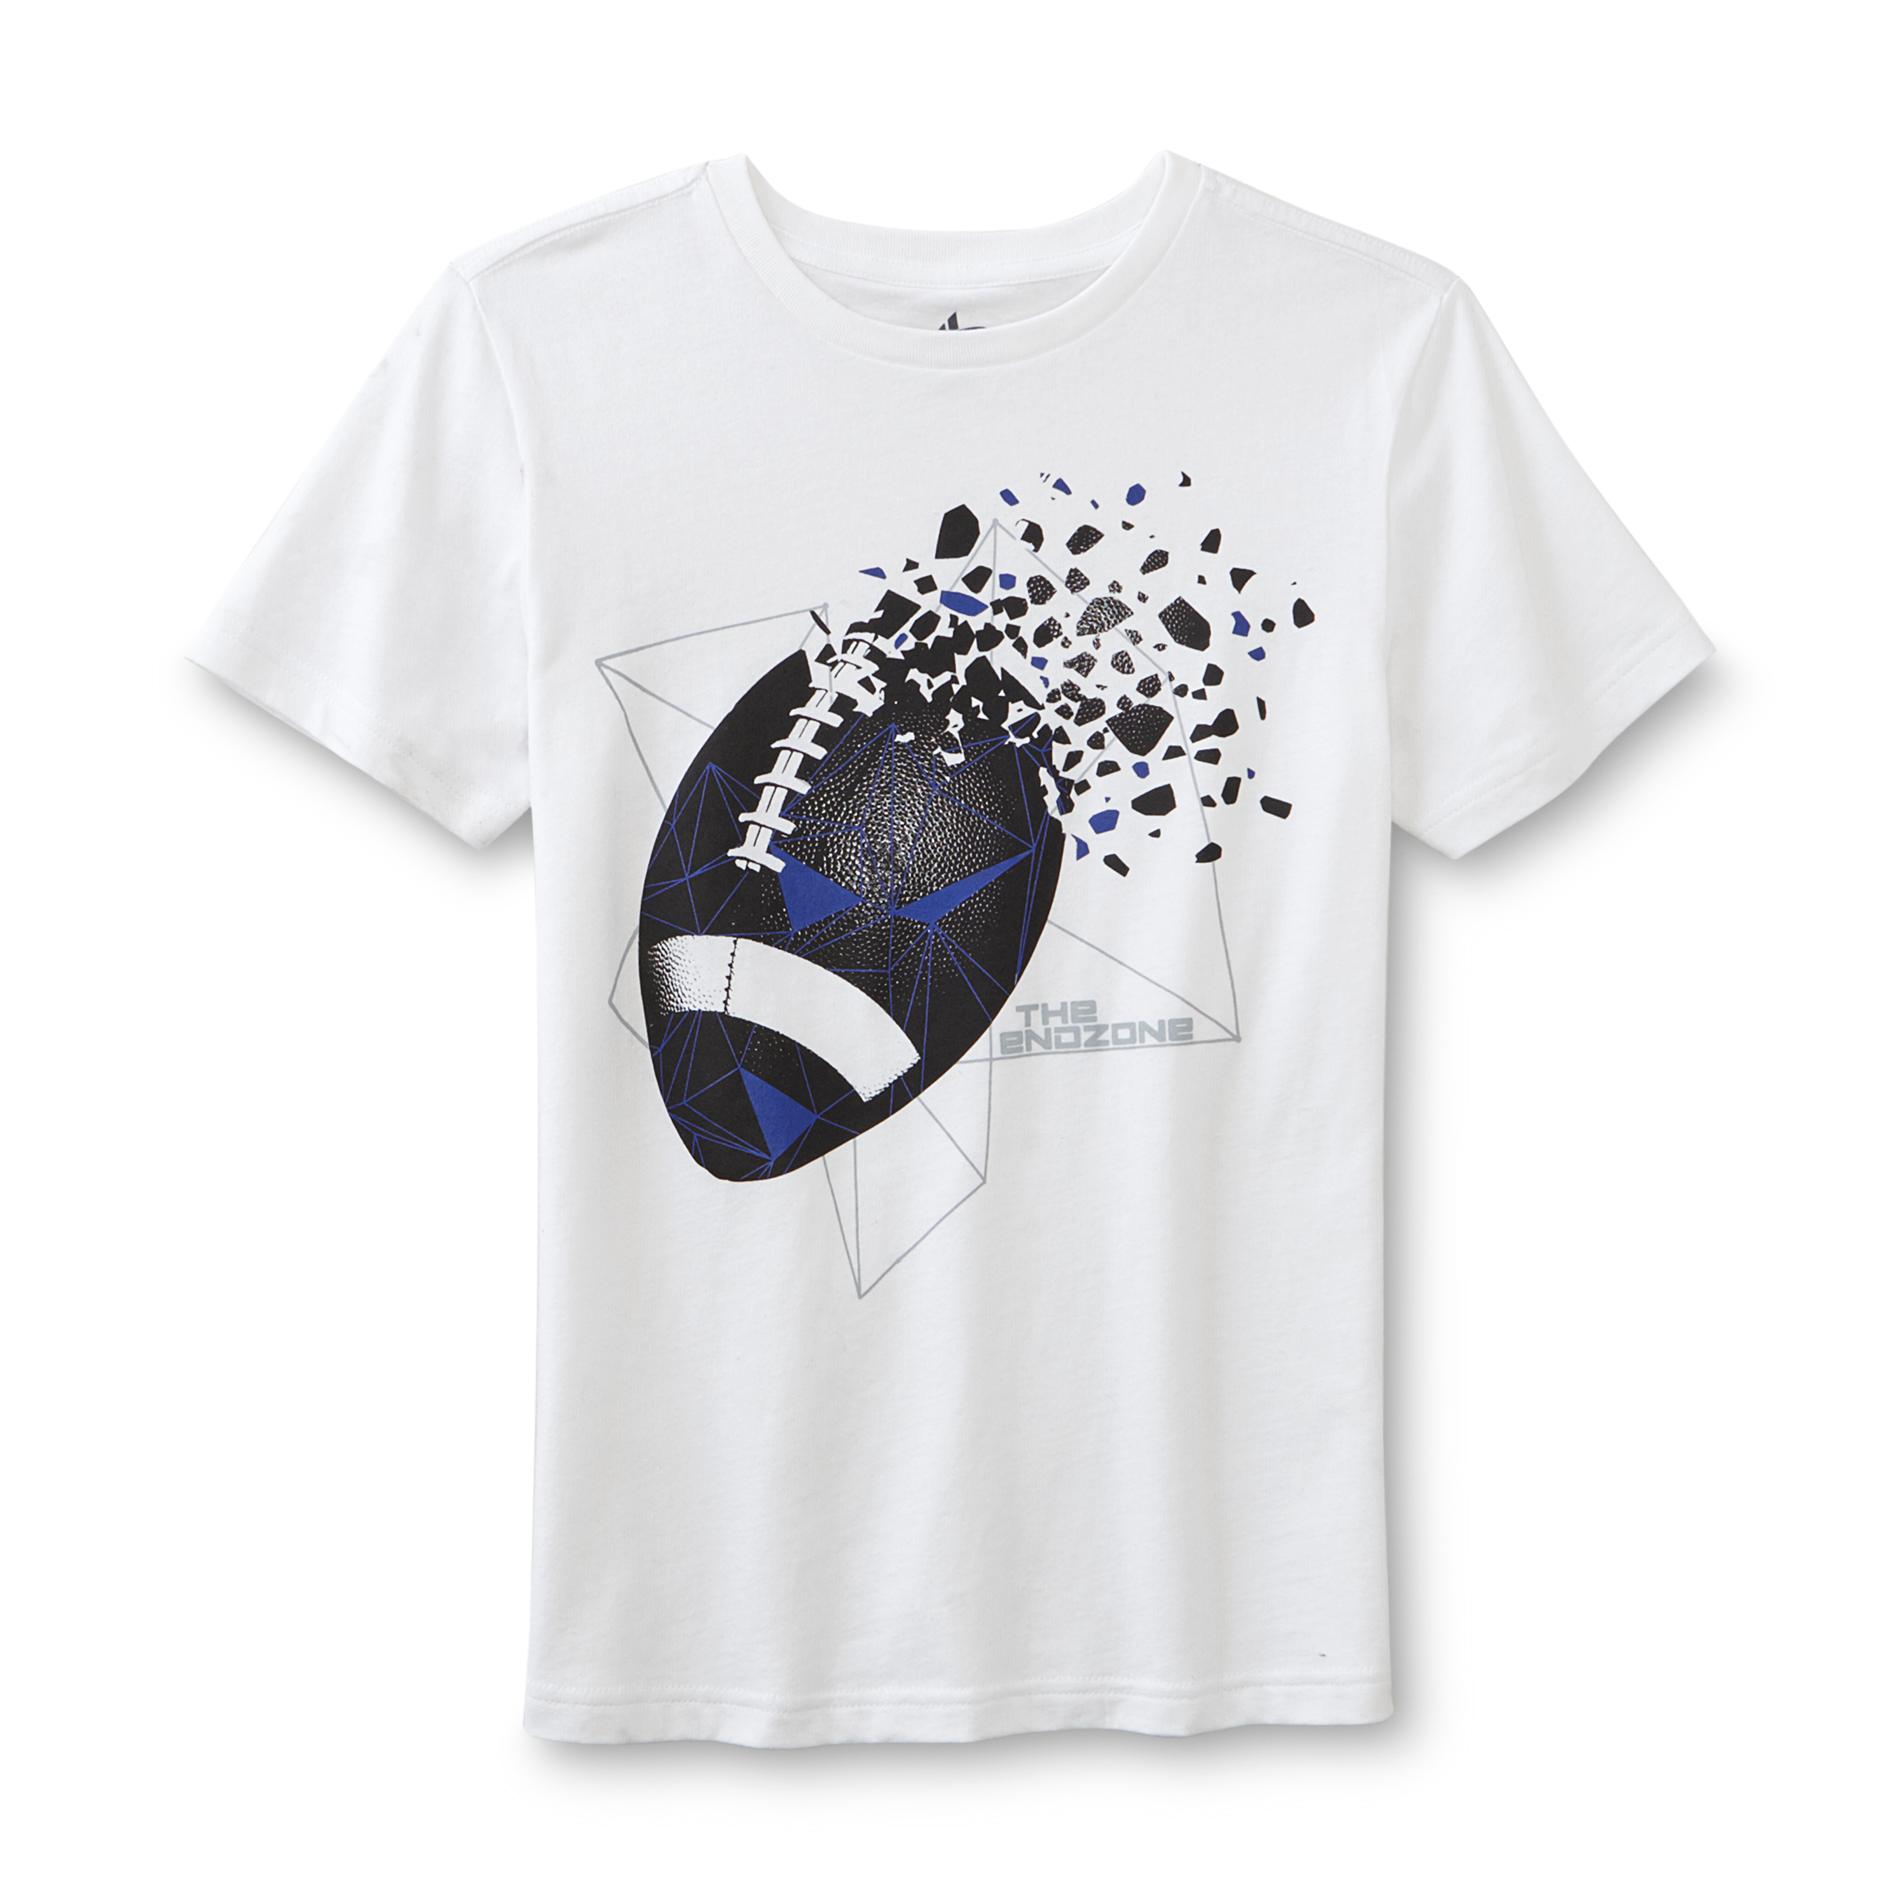 Athletech Boy's Graphic T-Shirt - Football